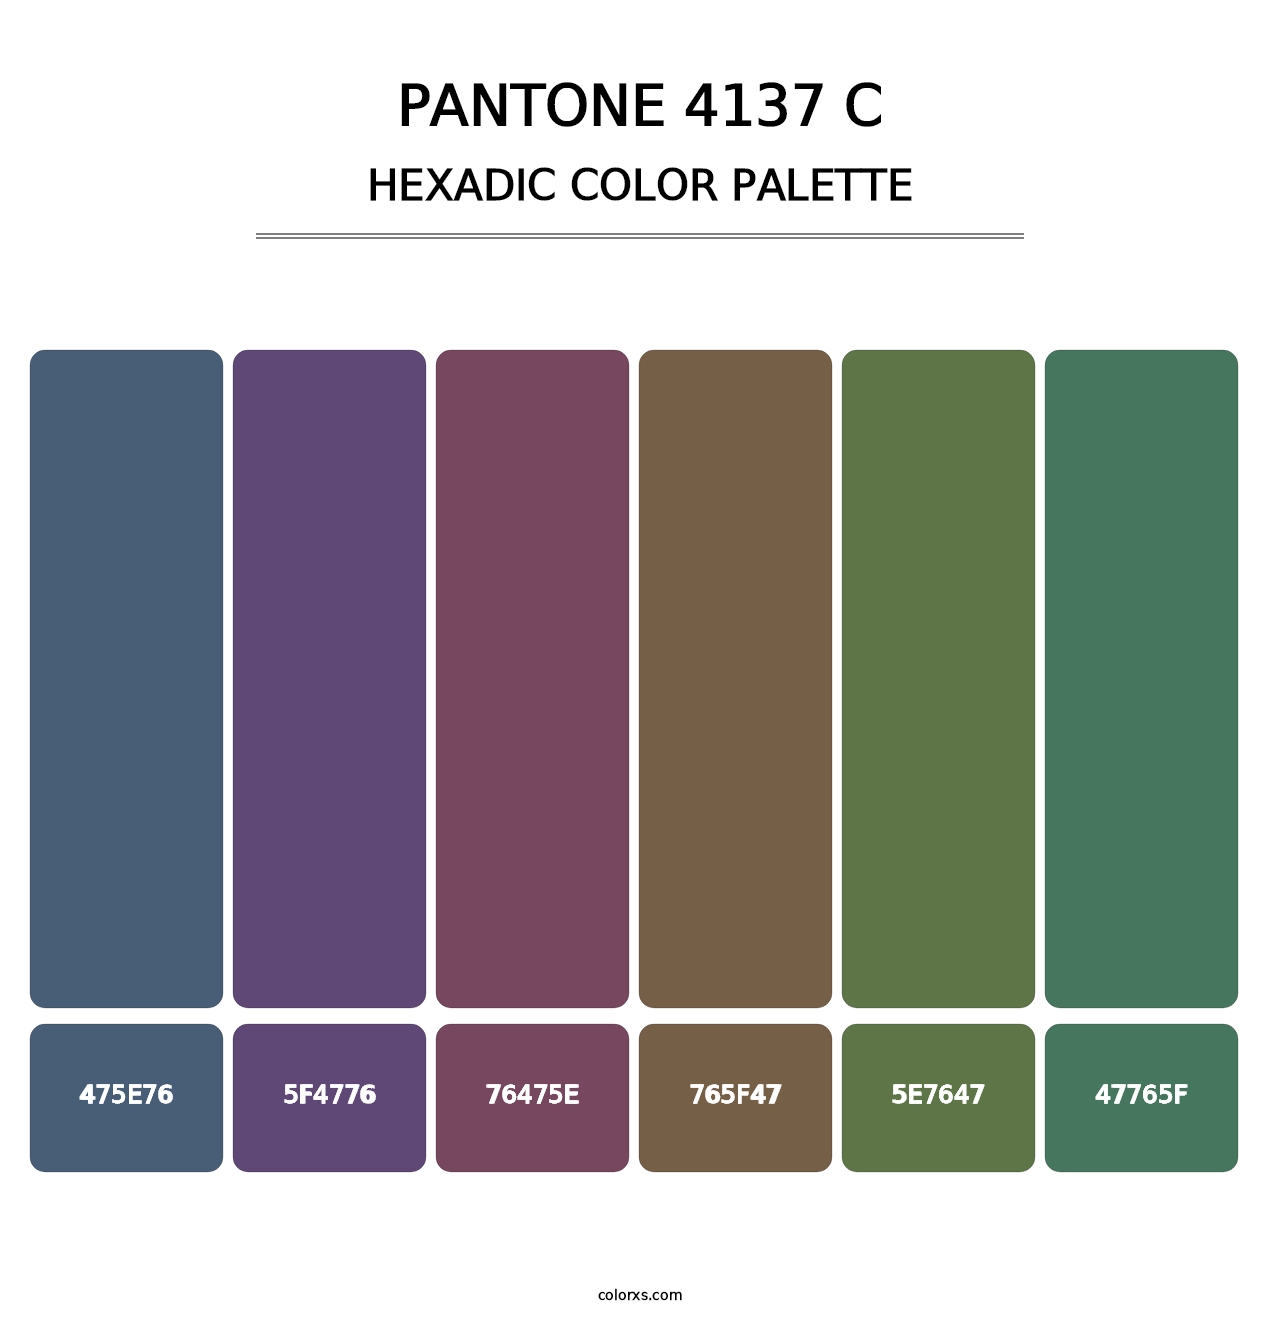 PANTONE 4137 C - Hexadic Color Palette